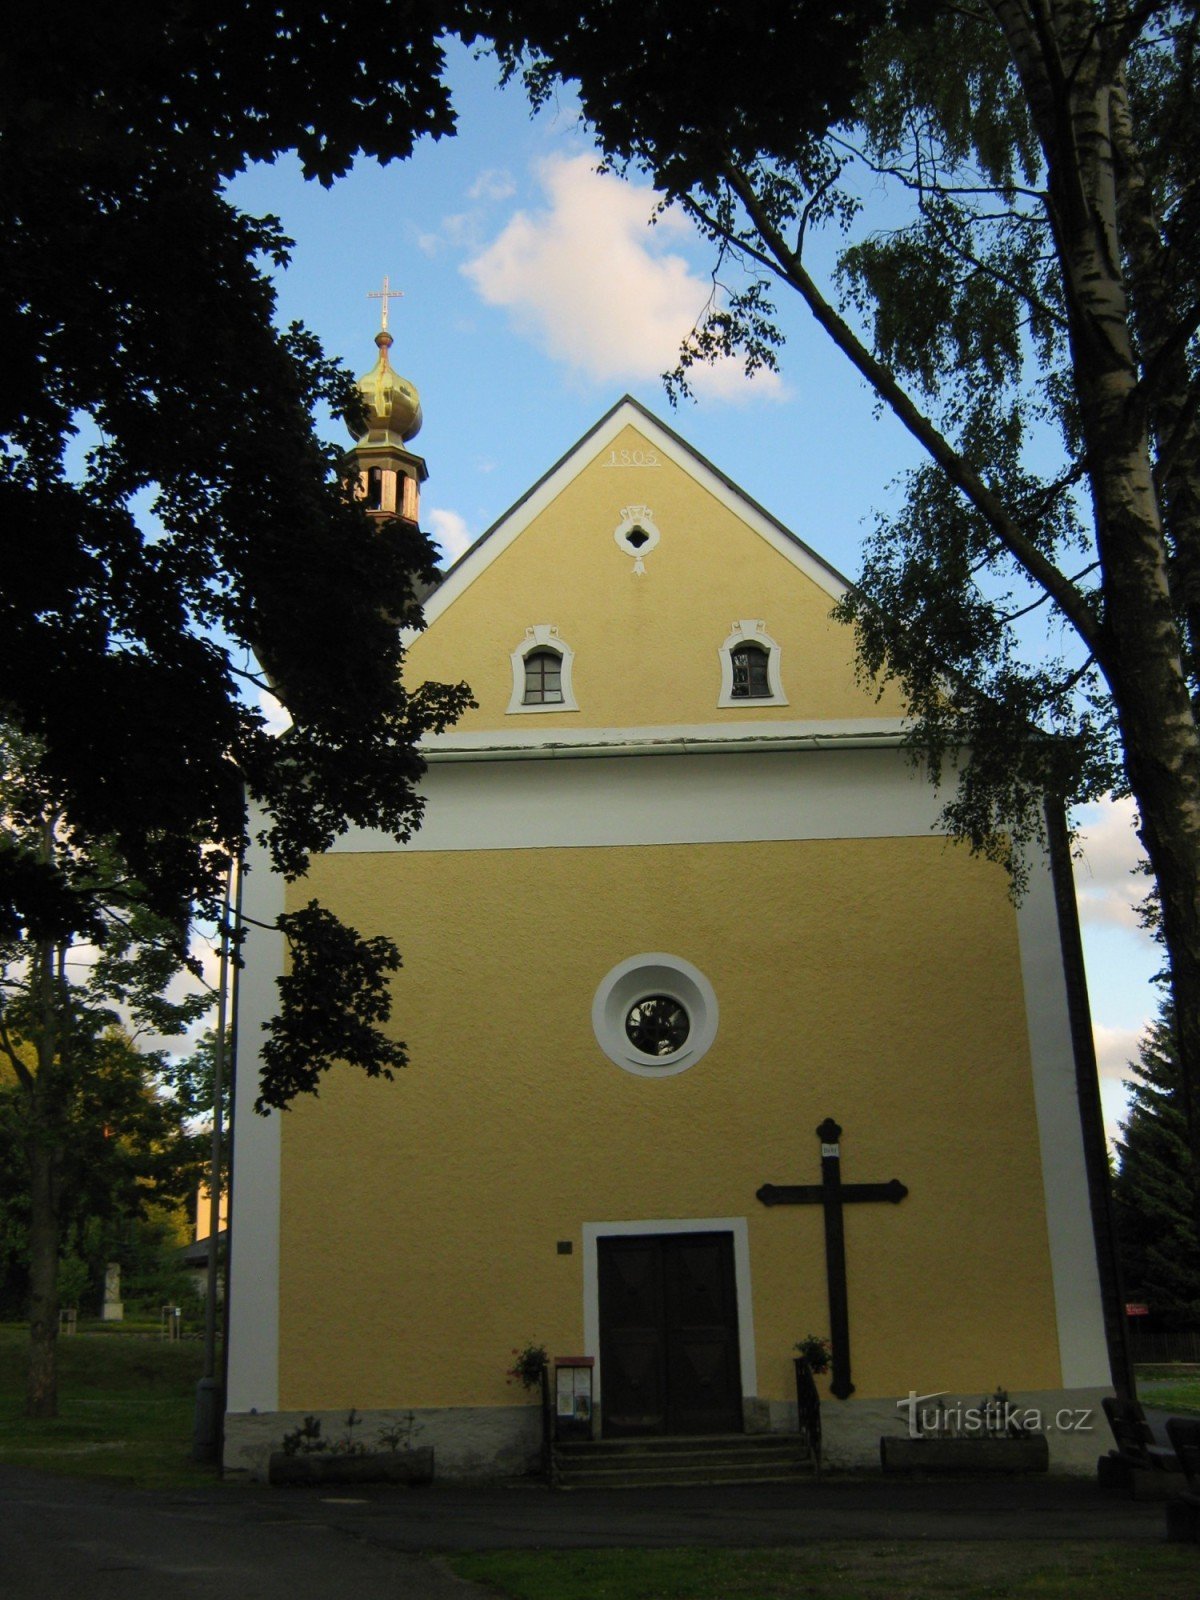 Srni - Church of St. Treenighet